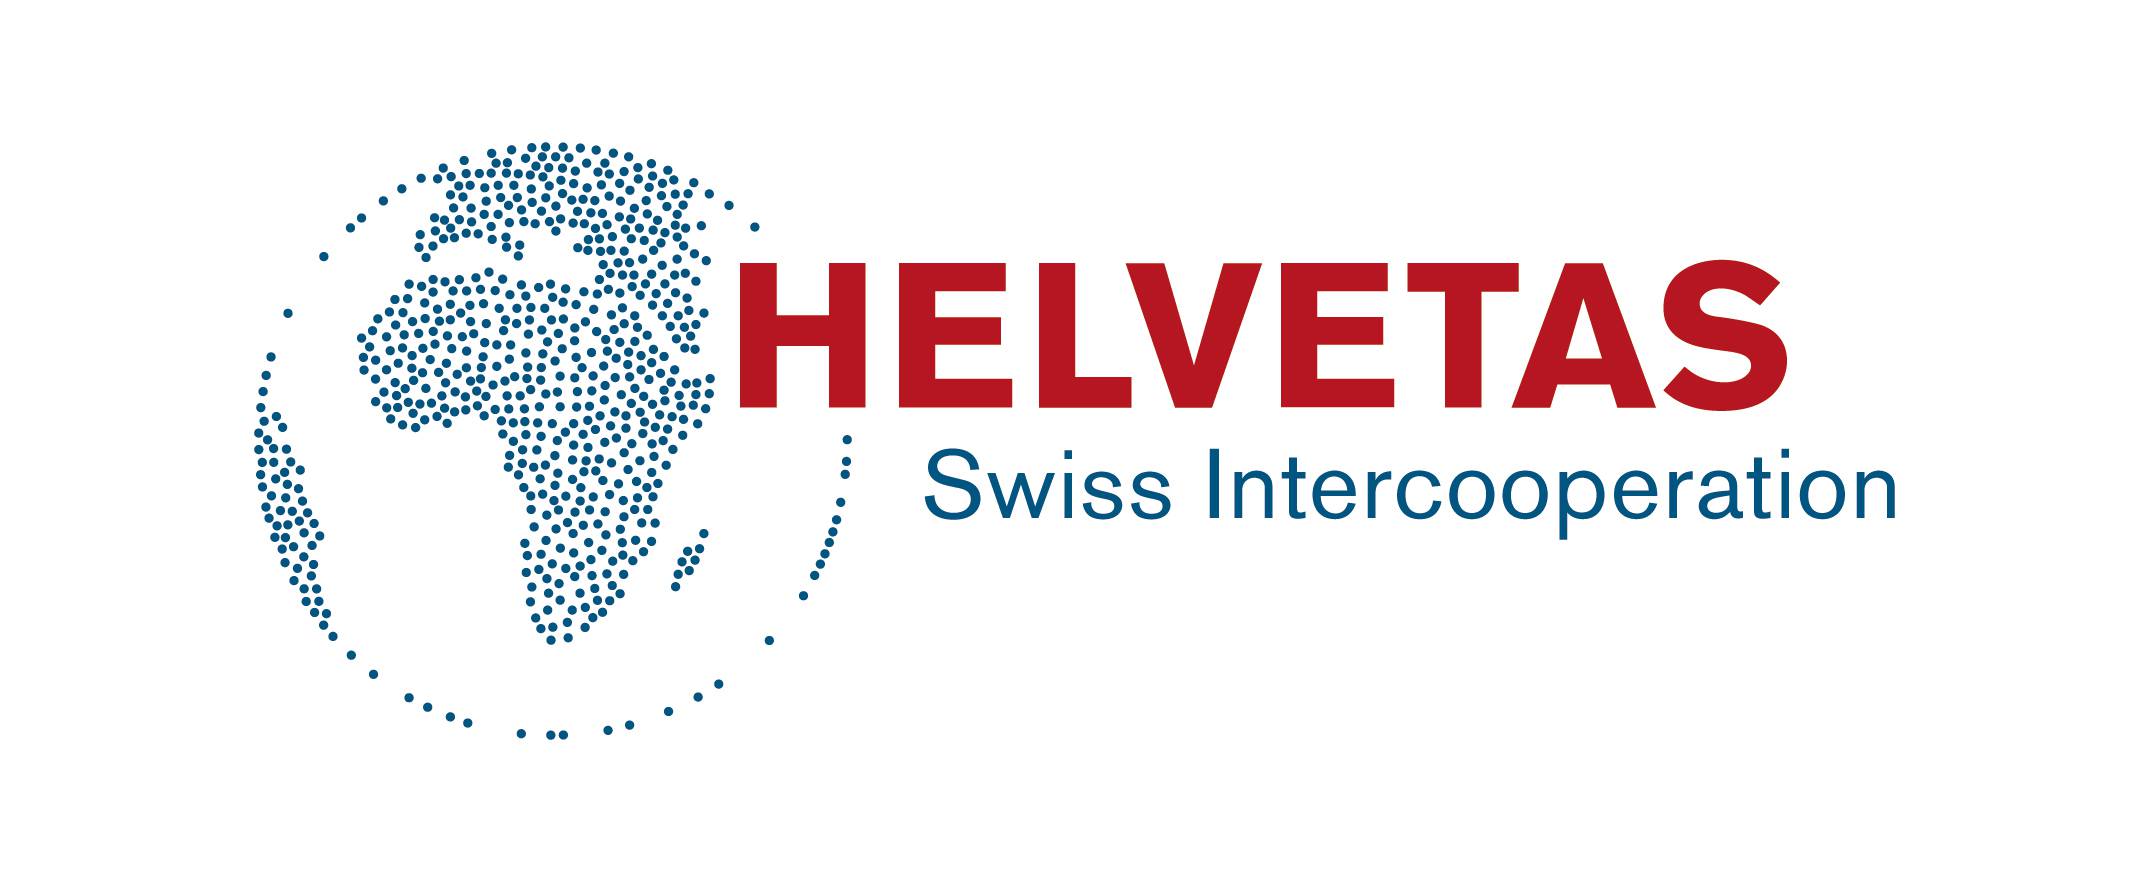 HELVETAS Swiss Intercooperation (HSI)